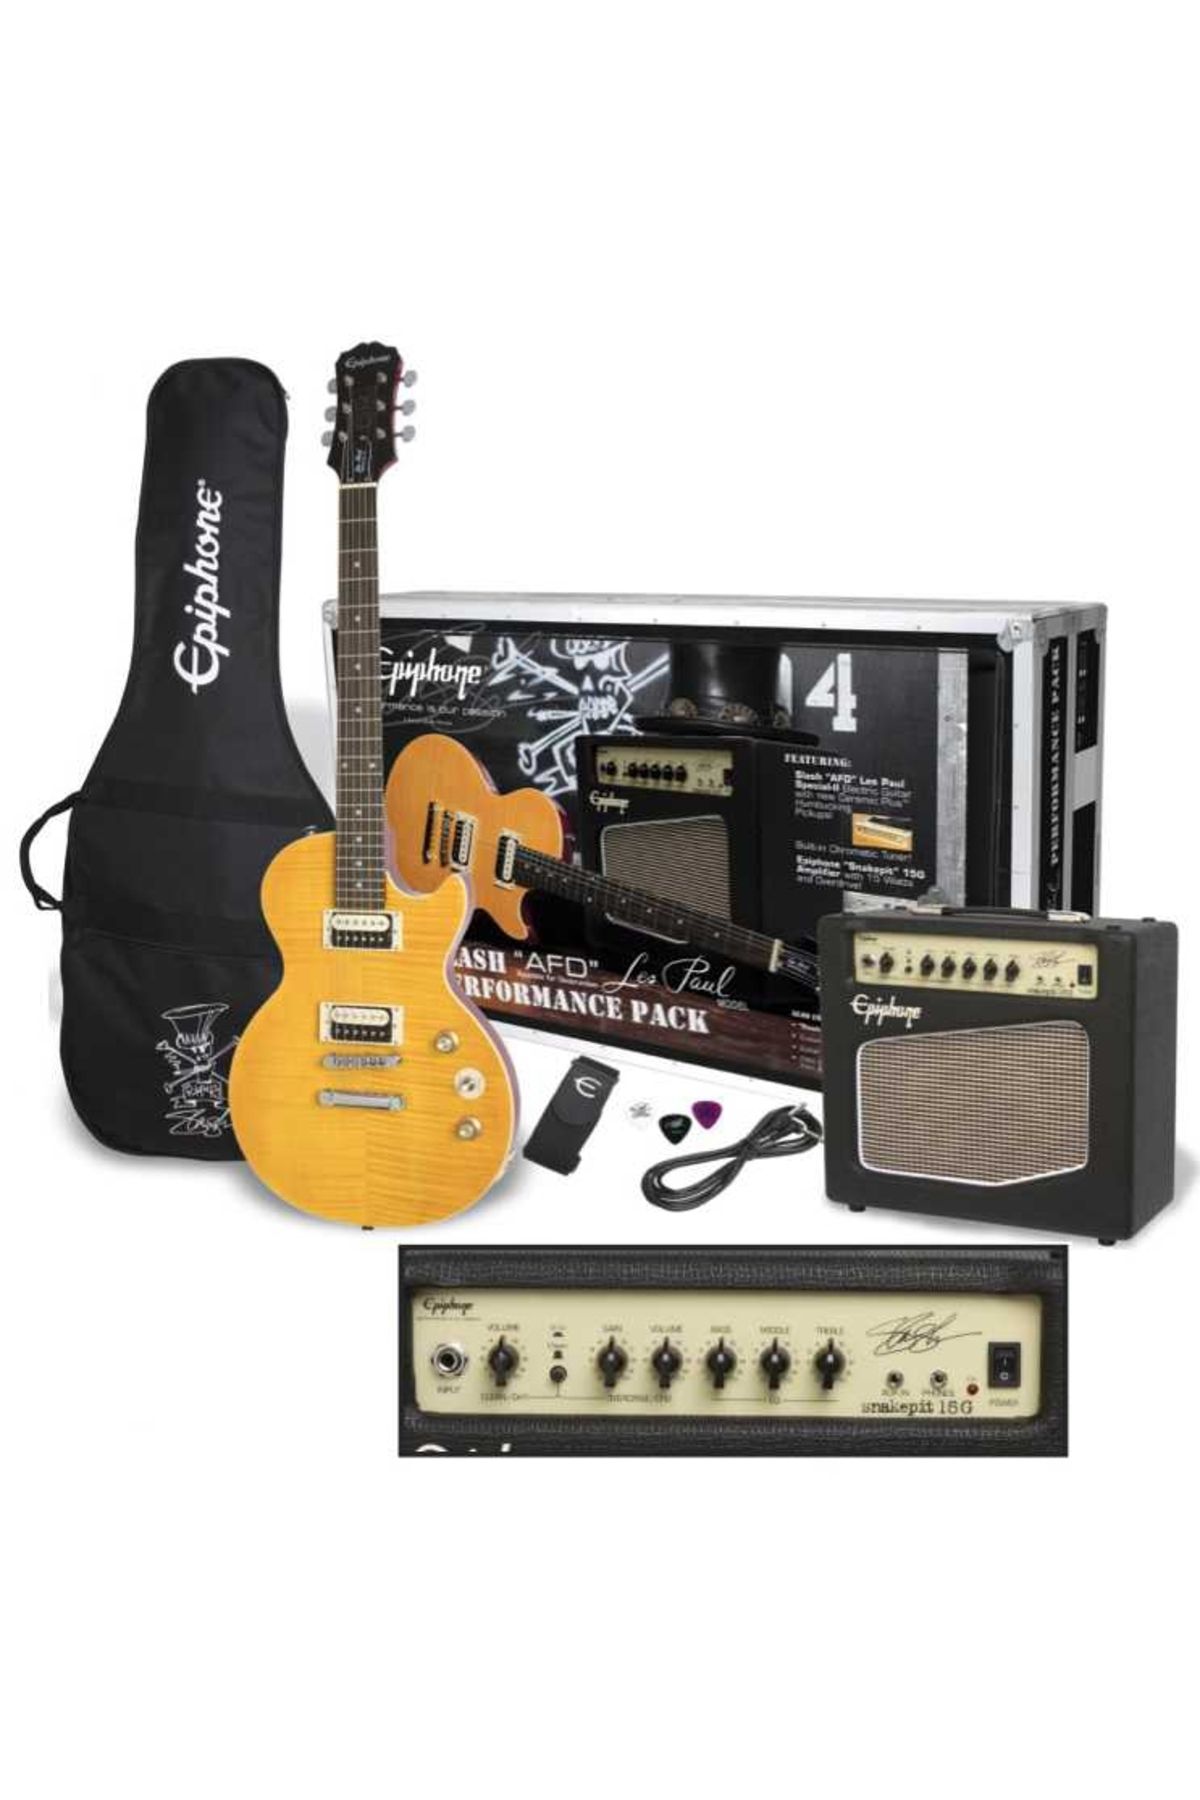 Epiphone Slash Afd Les Paul Performance Pack Elektro Gitar Seti